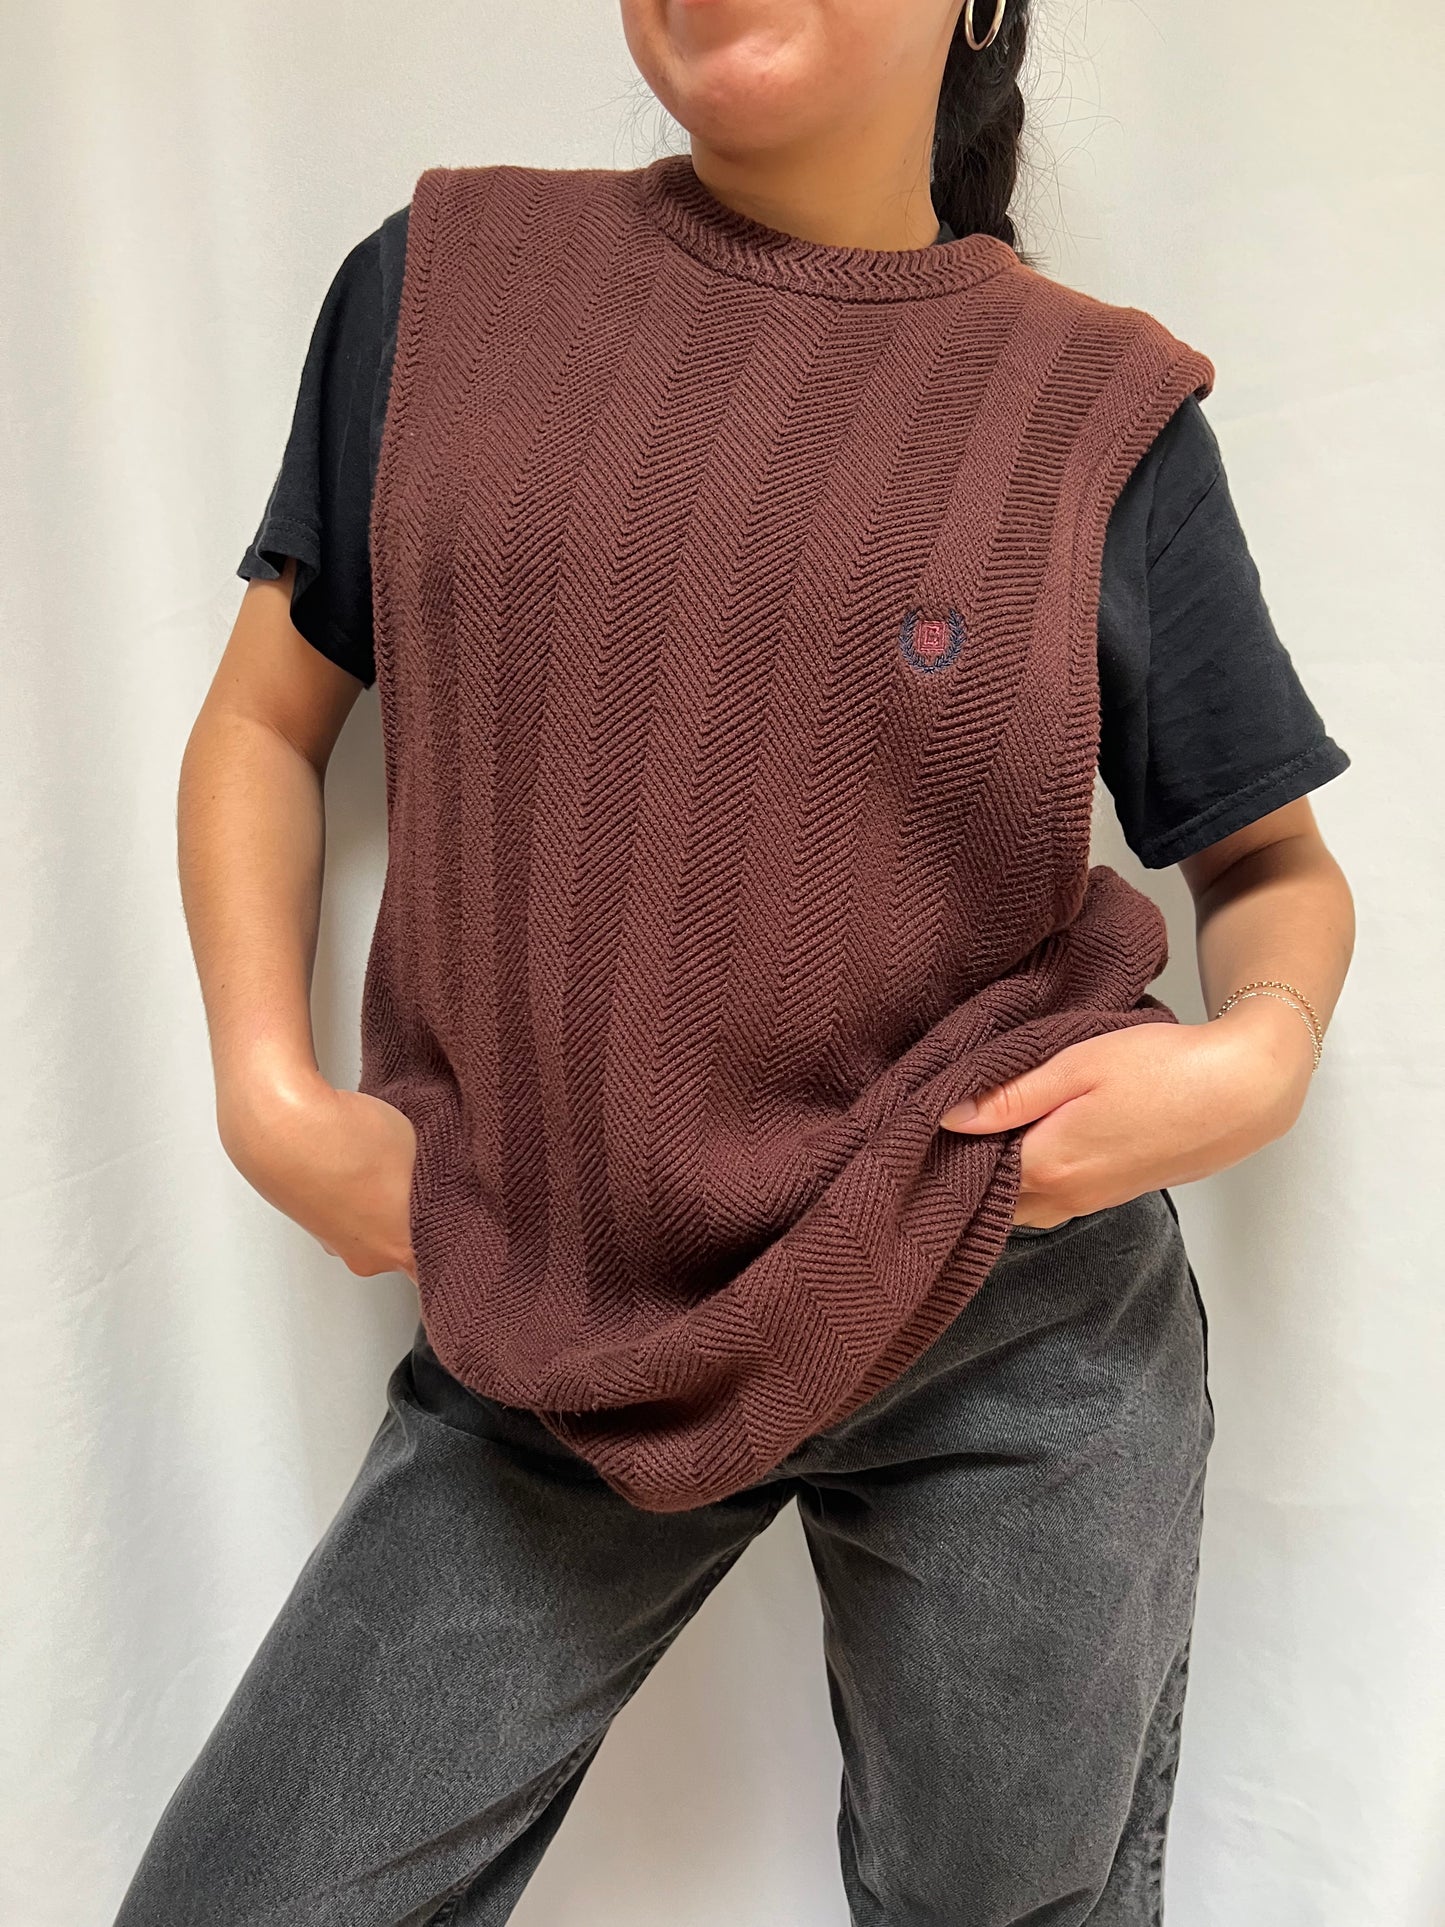 Brown Chaps Ralph Lauren Sweater Vest - L